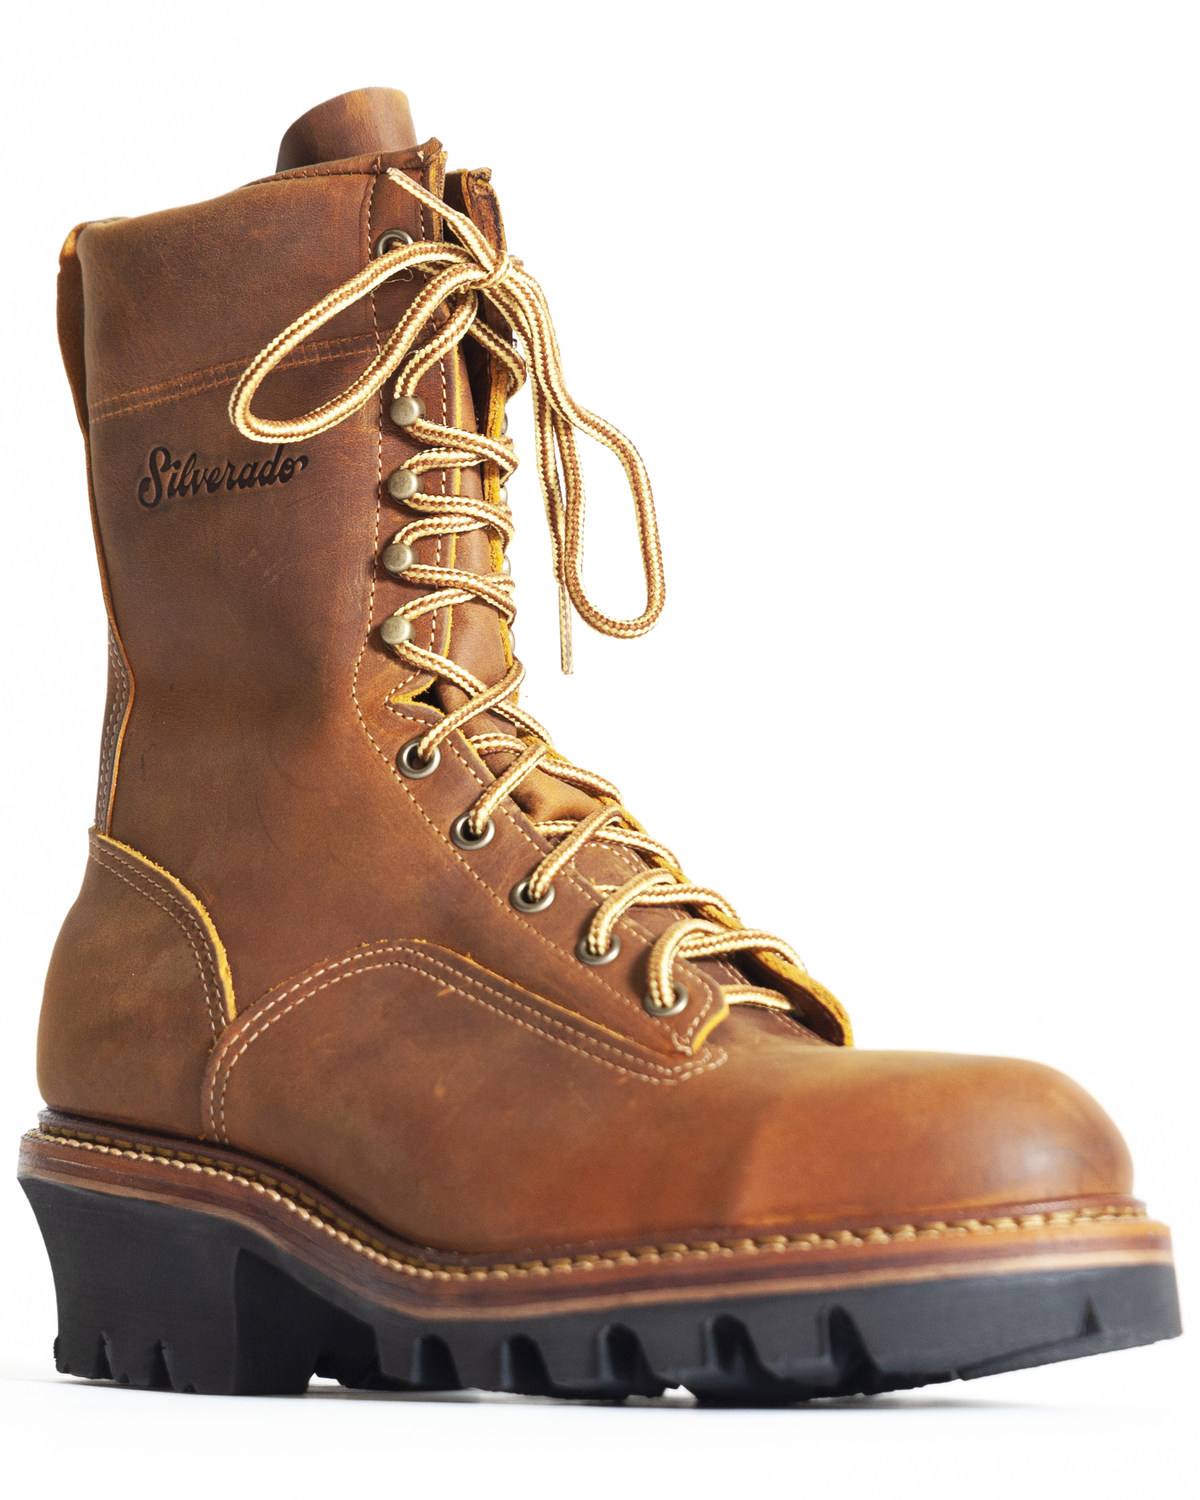 Silverado Men's Lace-Up Logger Work Boots - Soft Toe